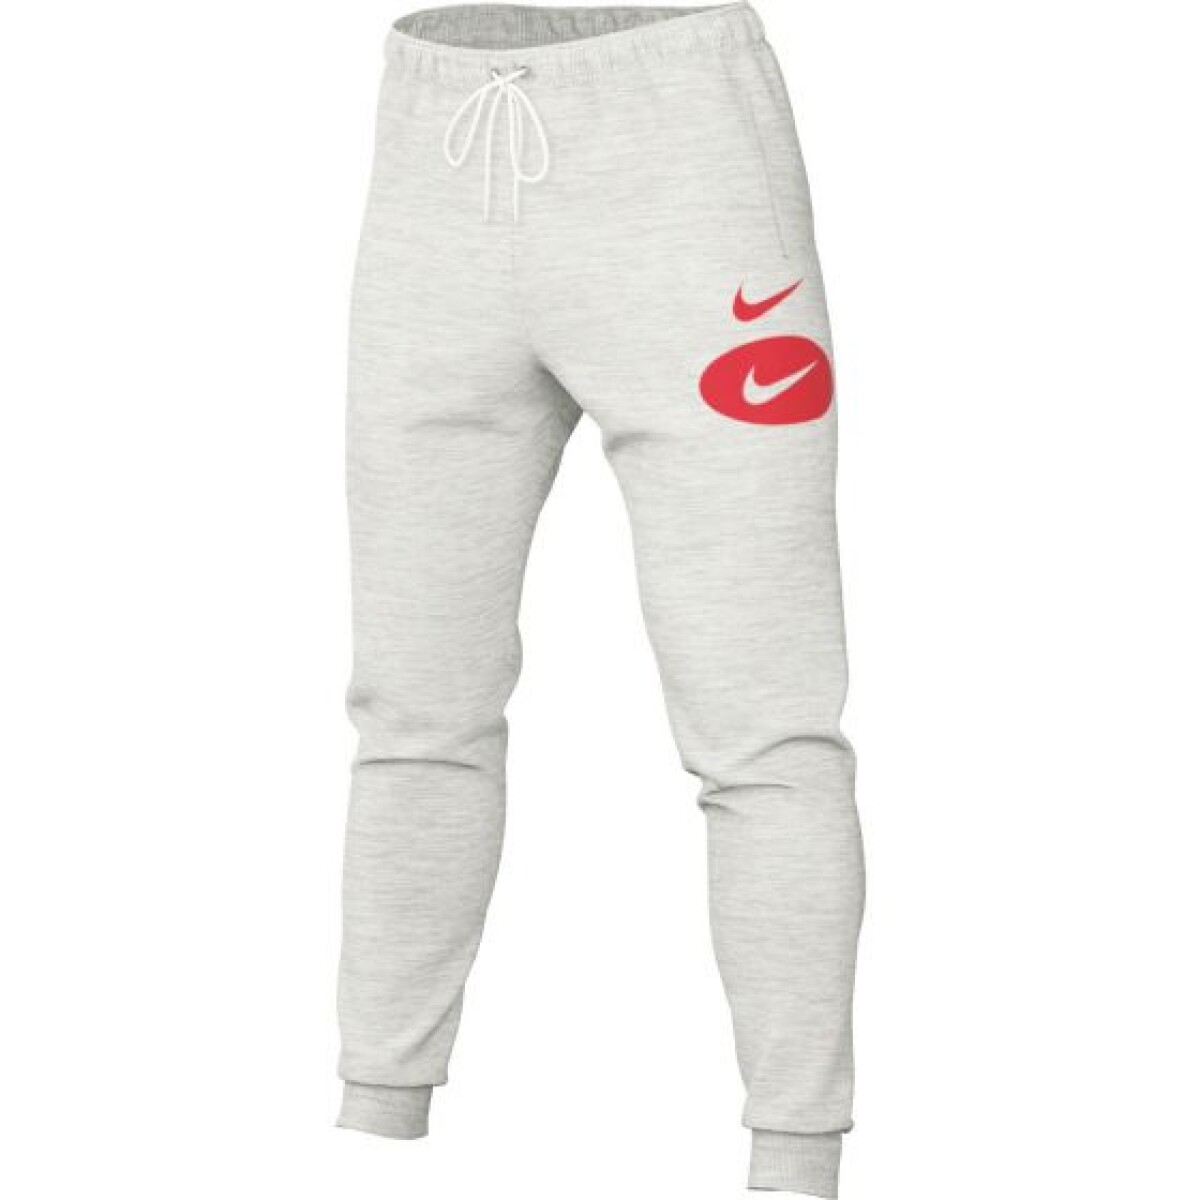 Pantalon Nike Moda Hombre SL BB - S/C 